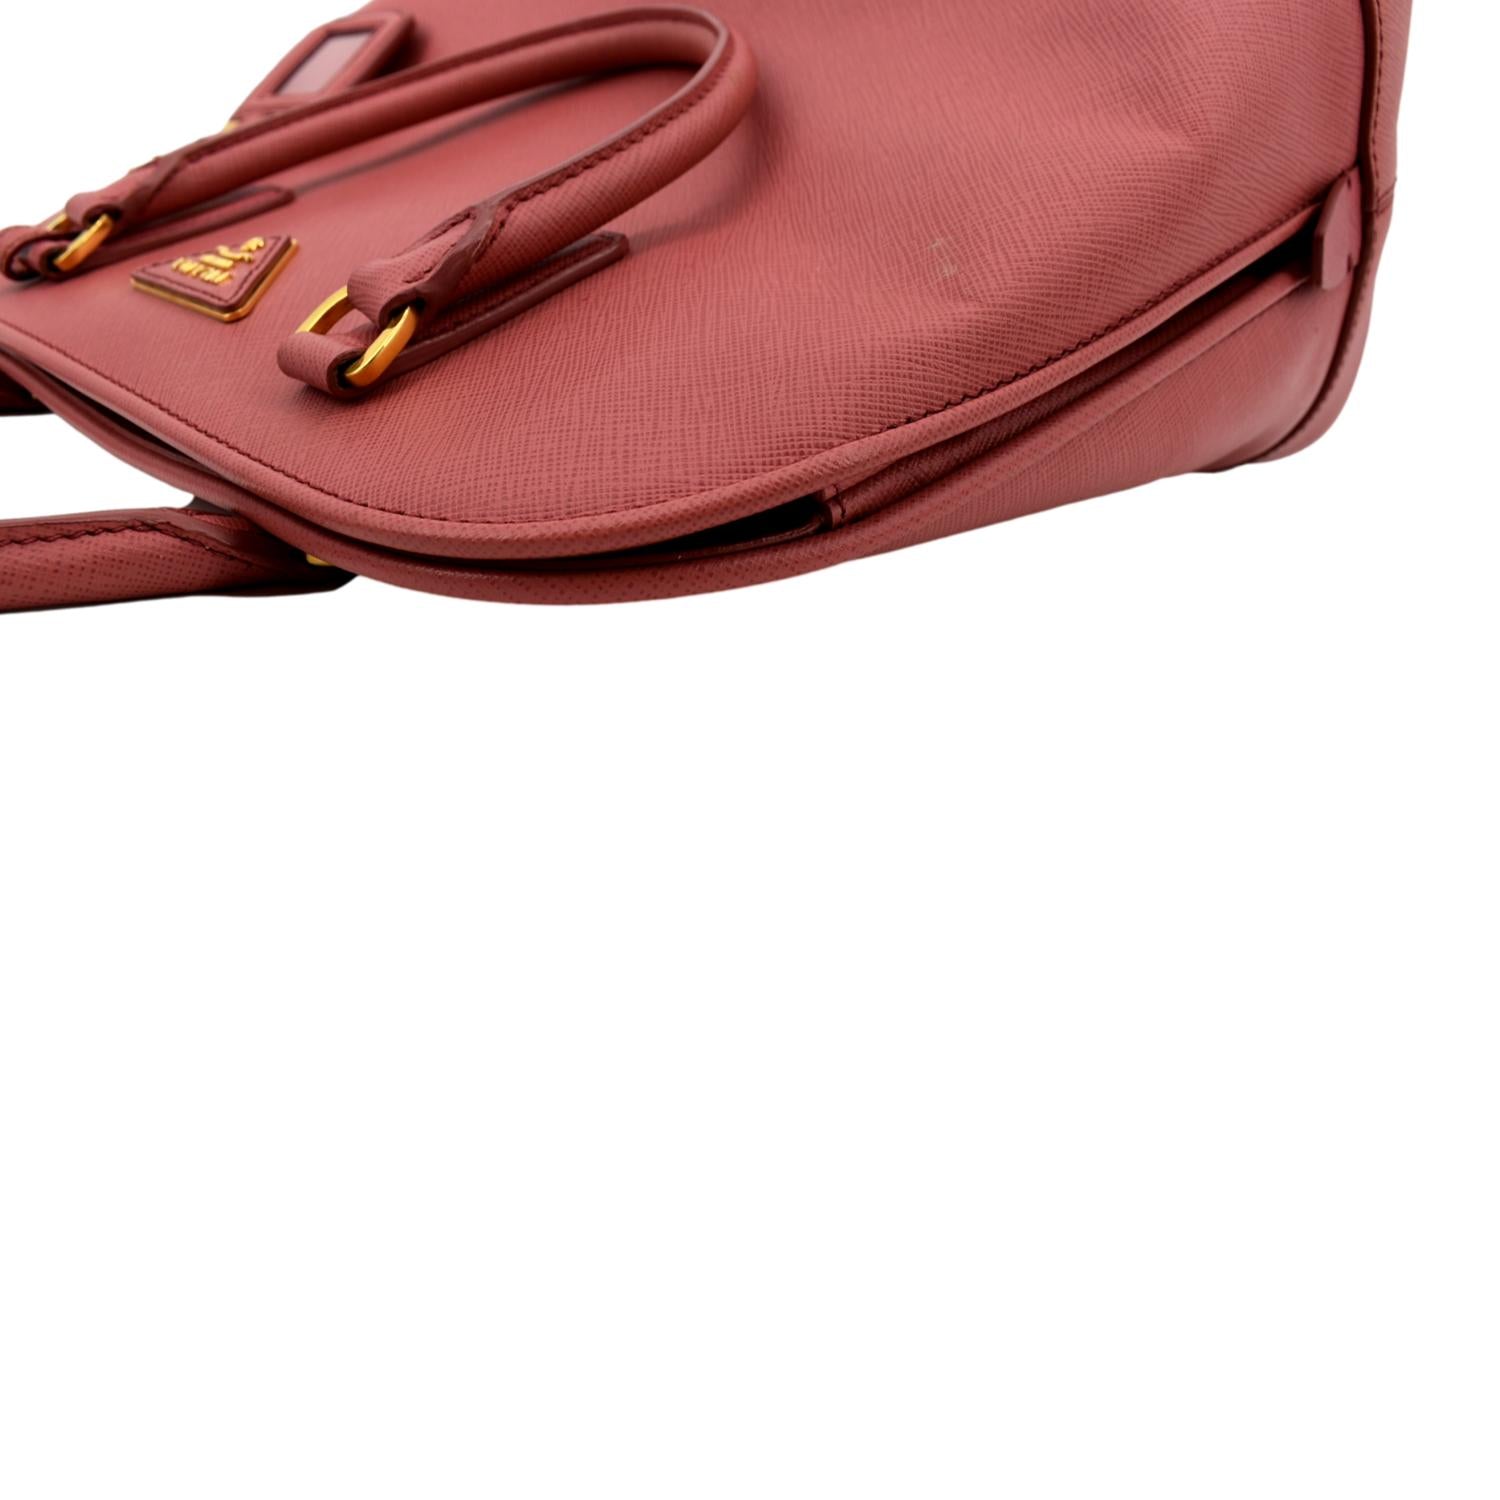 Prada Mini Saffiano Promenade Bag, Pink (Peonia)